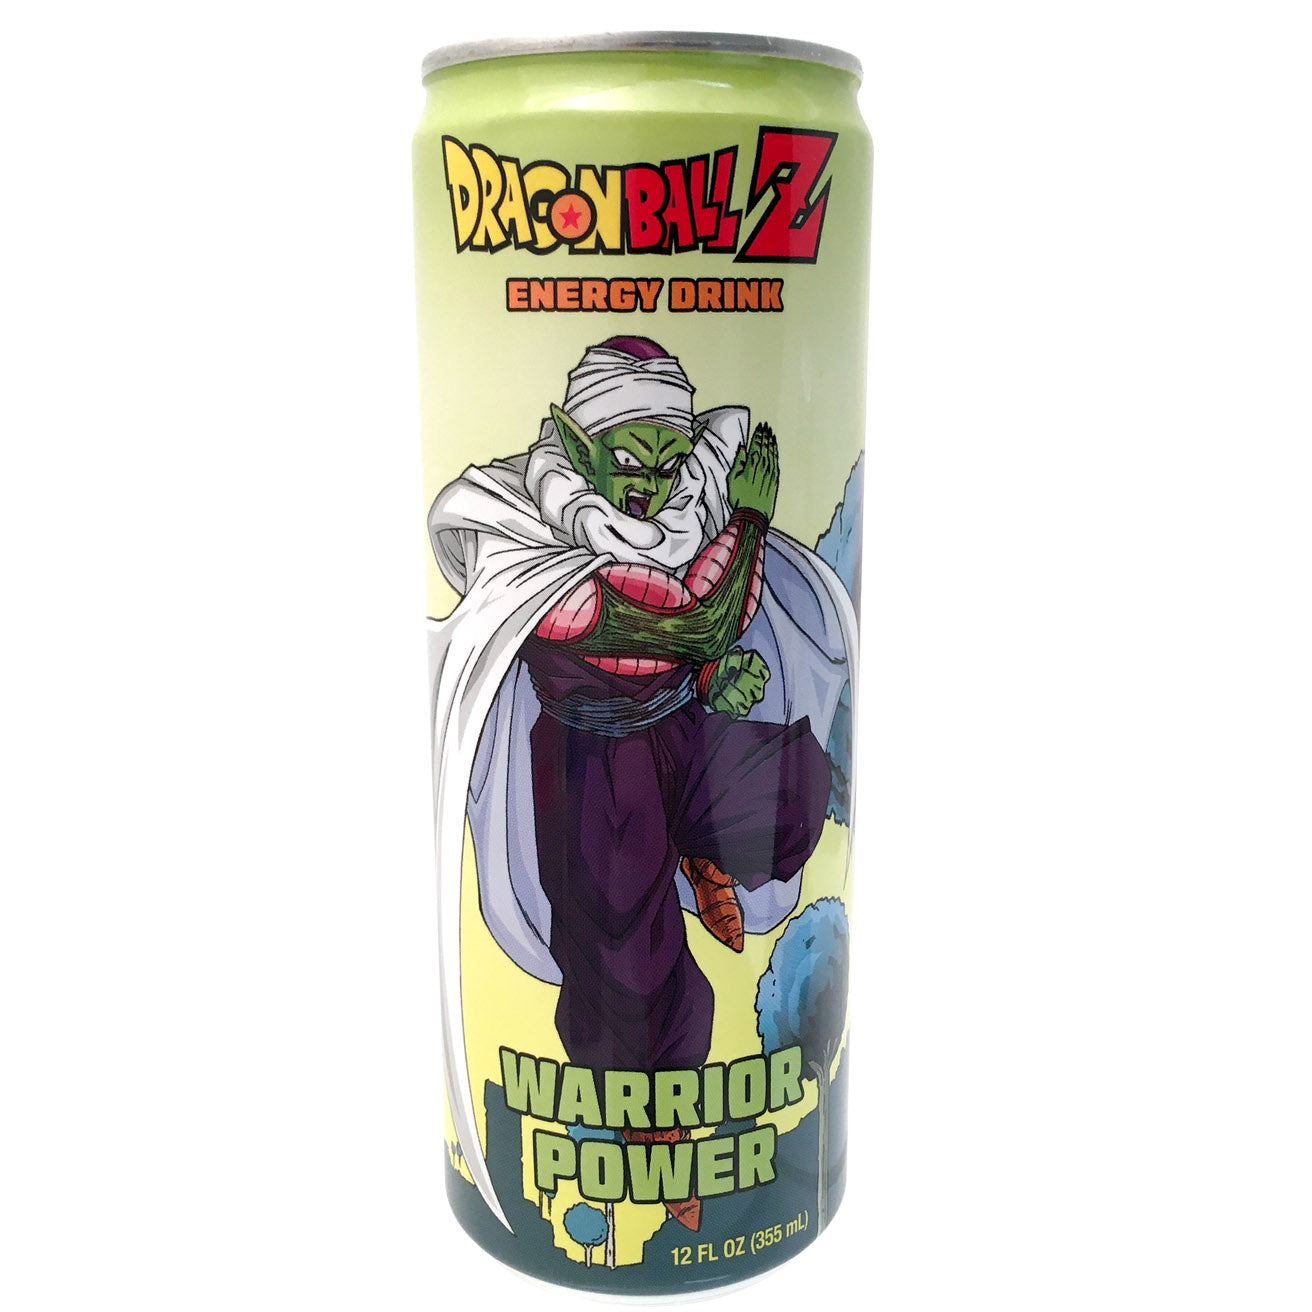 Dragonball Z Energy Drink